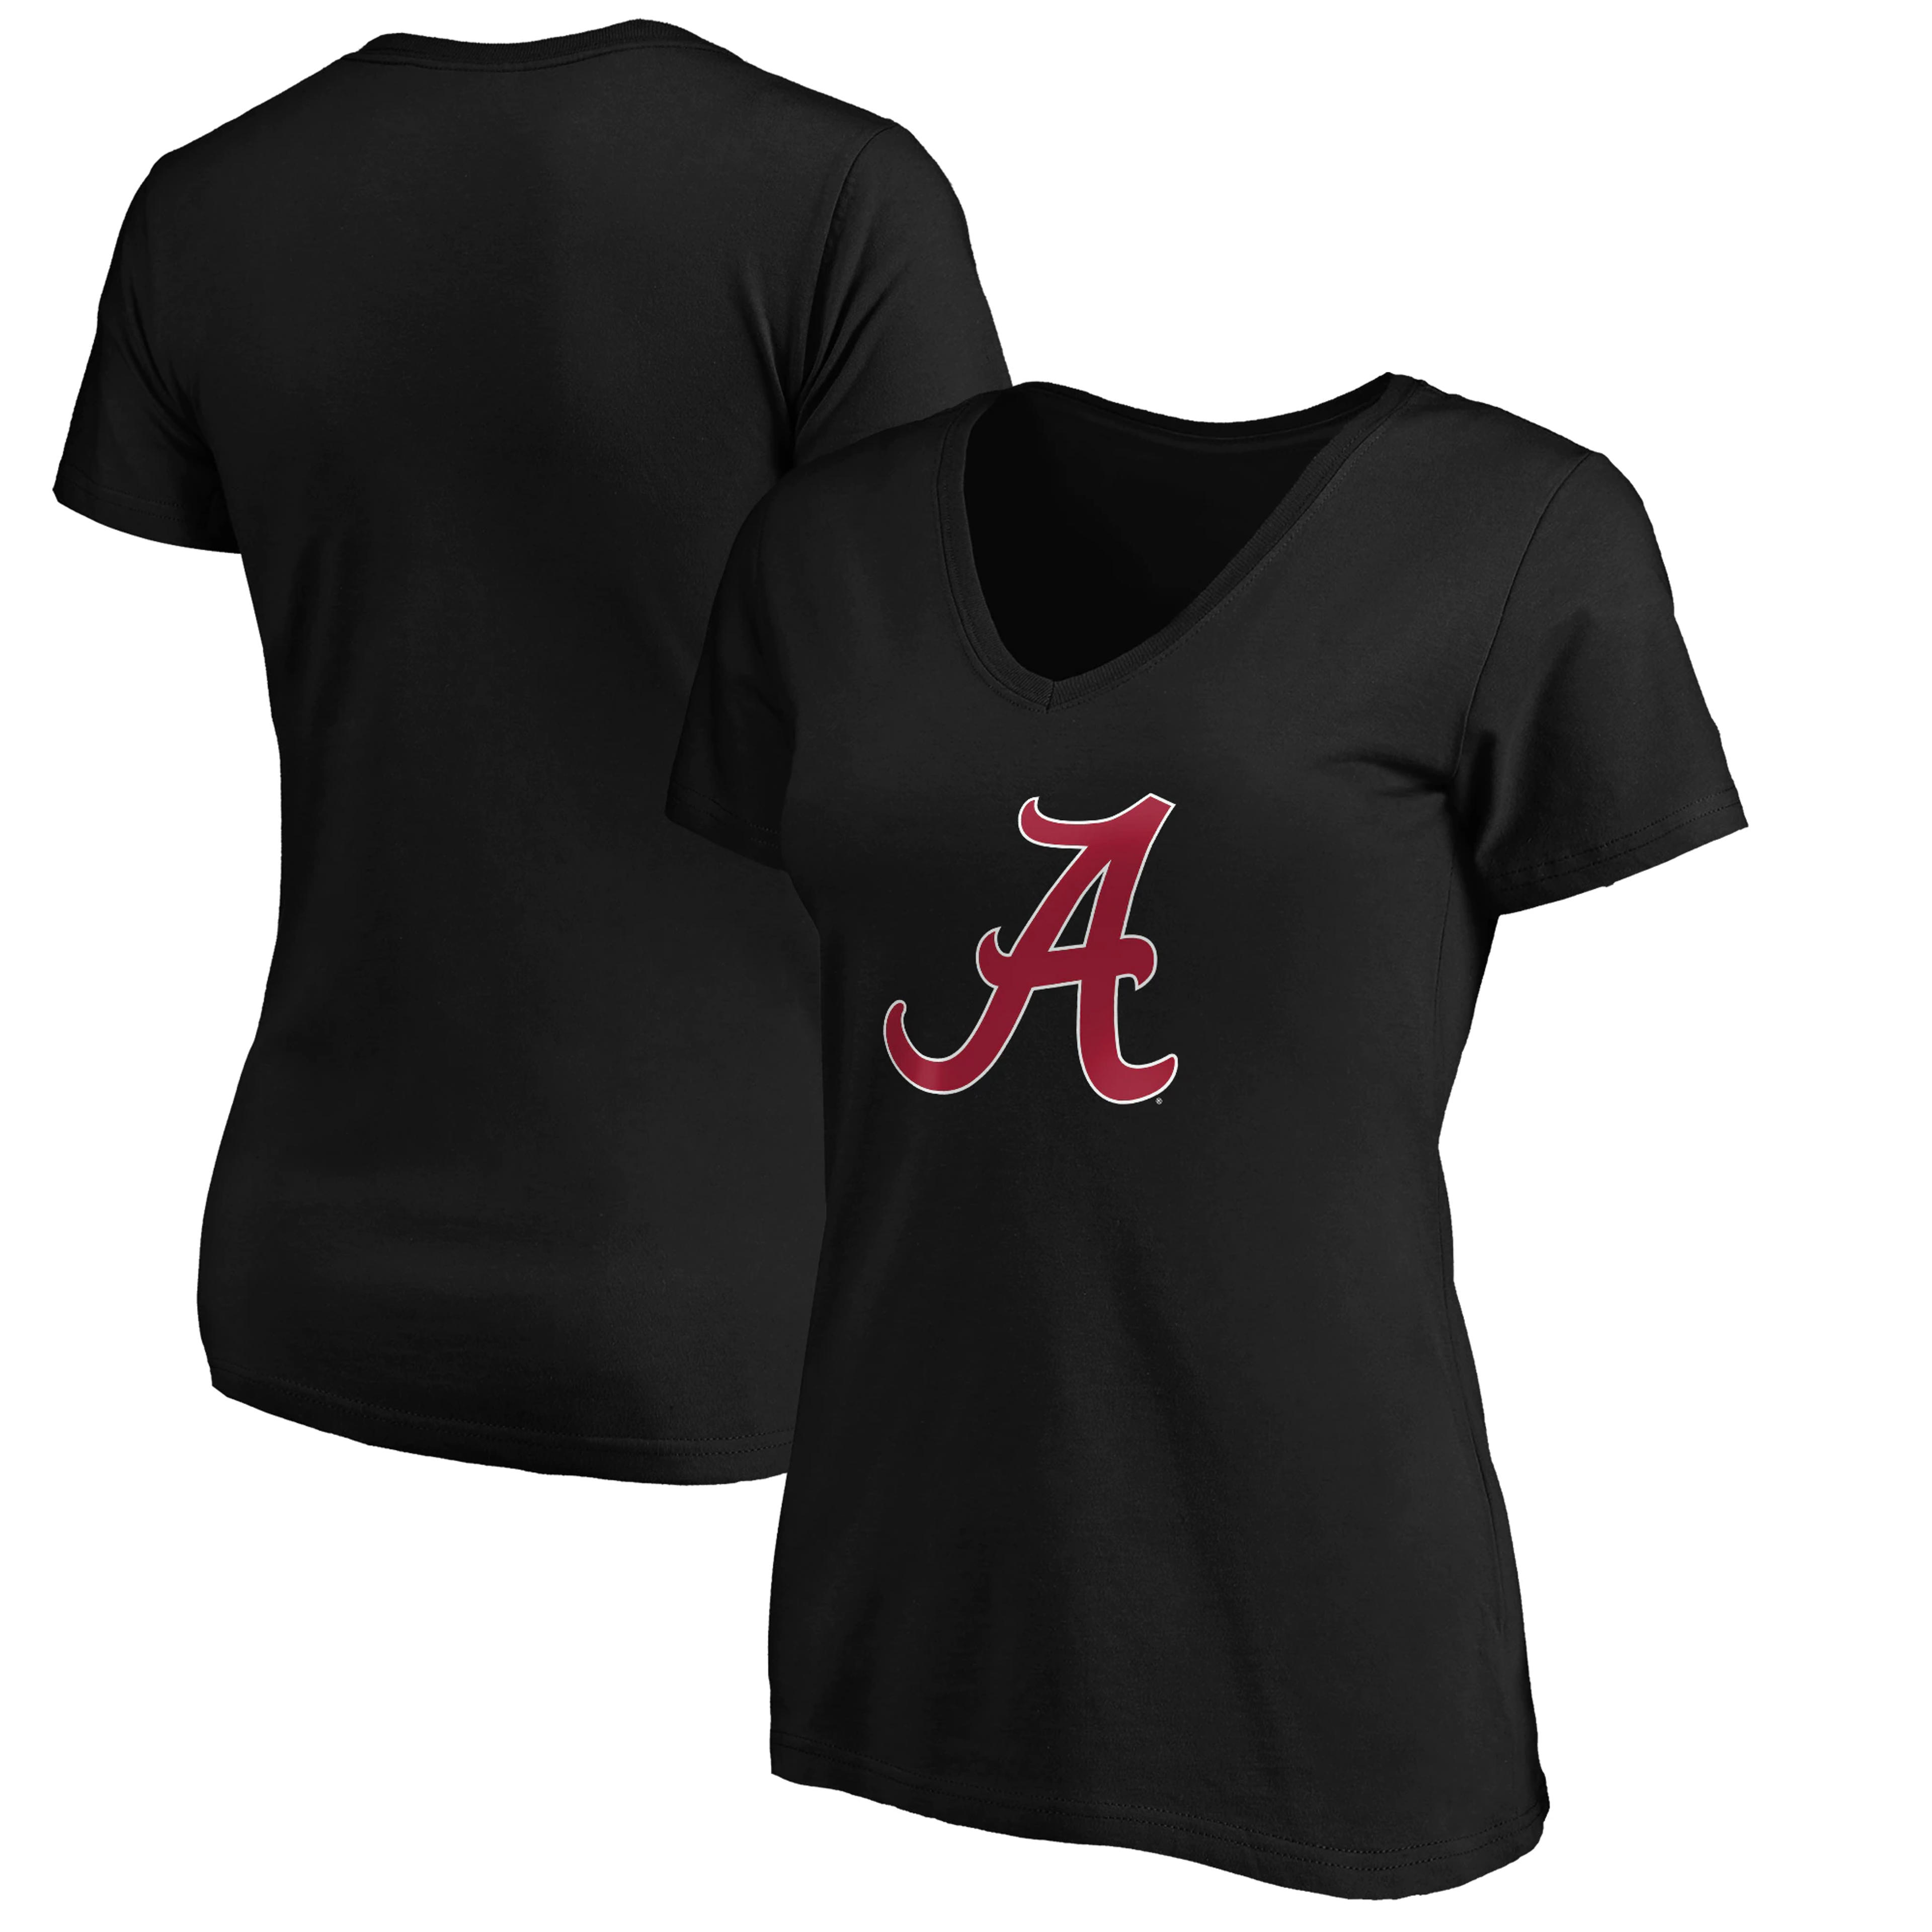 Women's Fanatics Branded Black Alabama Crimson Tide Primary Logo V-Neck T-Shirt